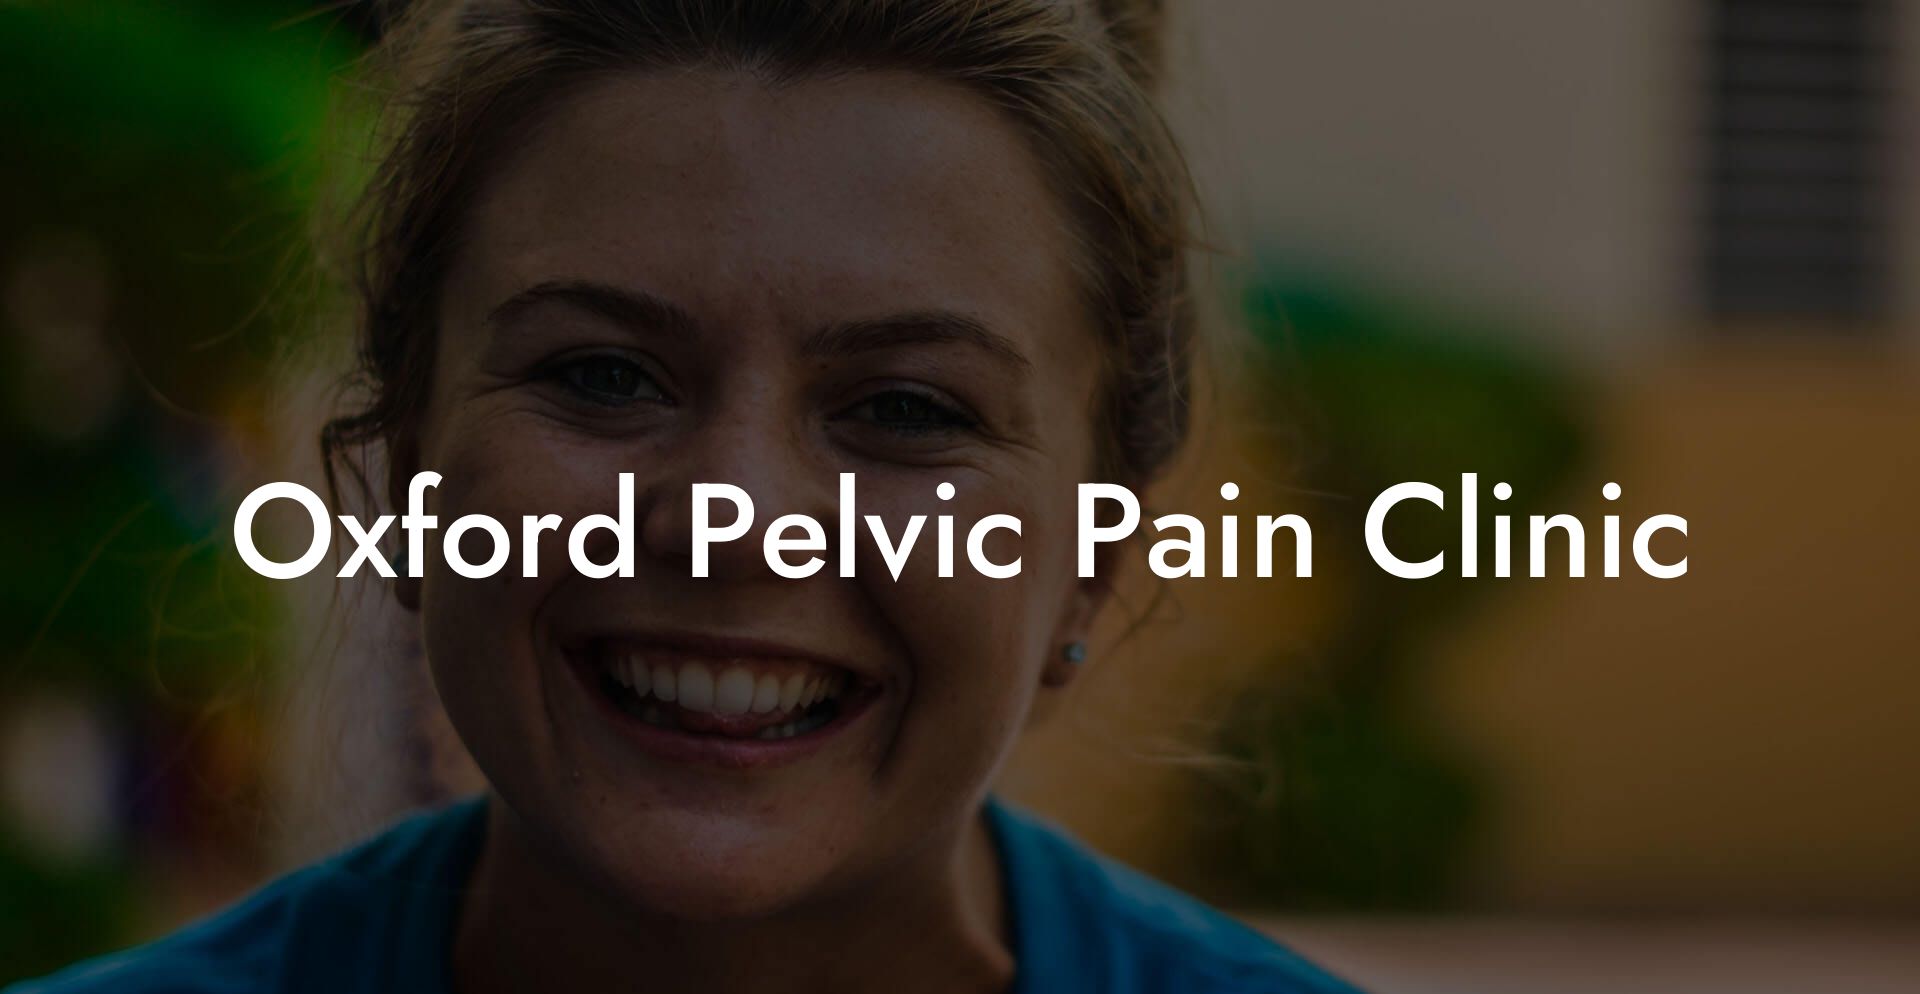 Oxford Pelvic Pain Clinic